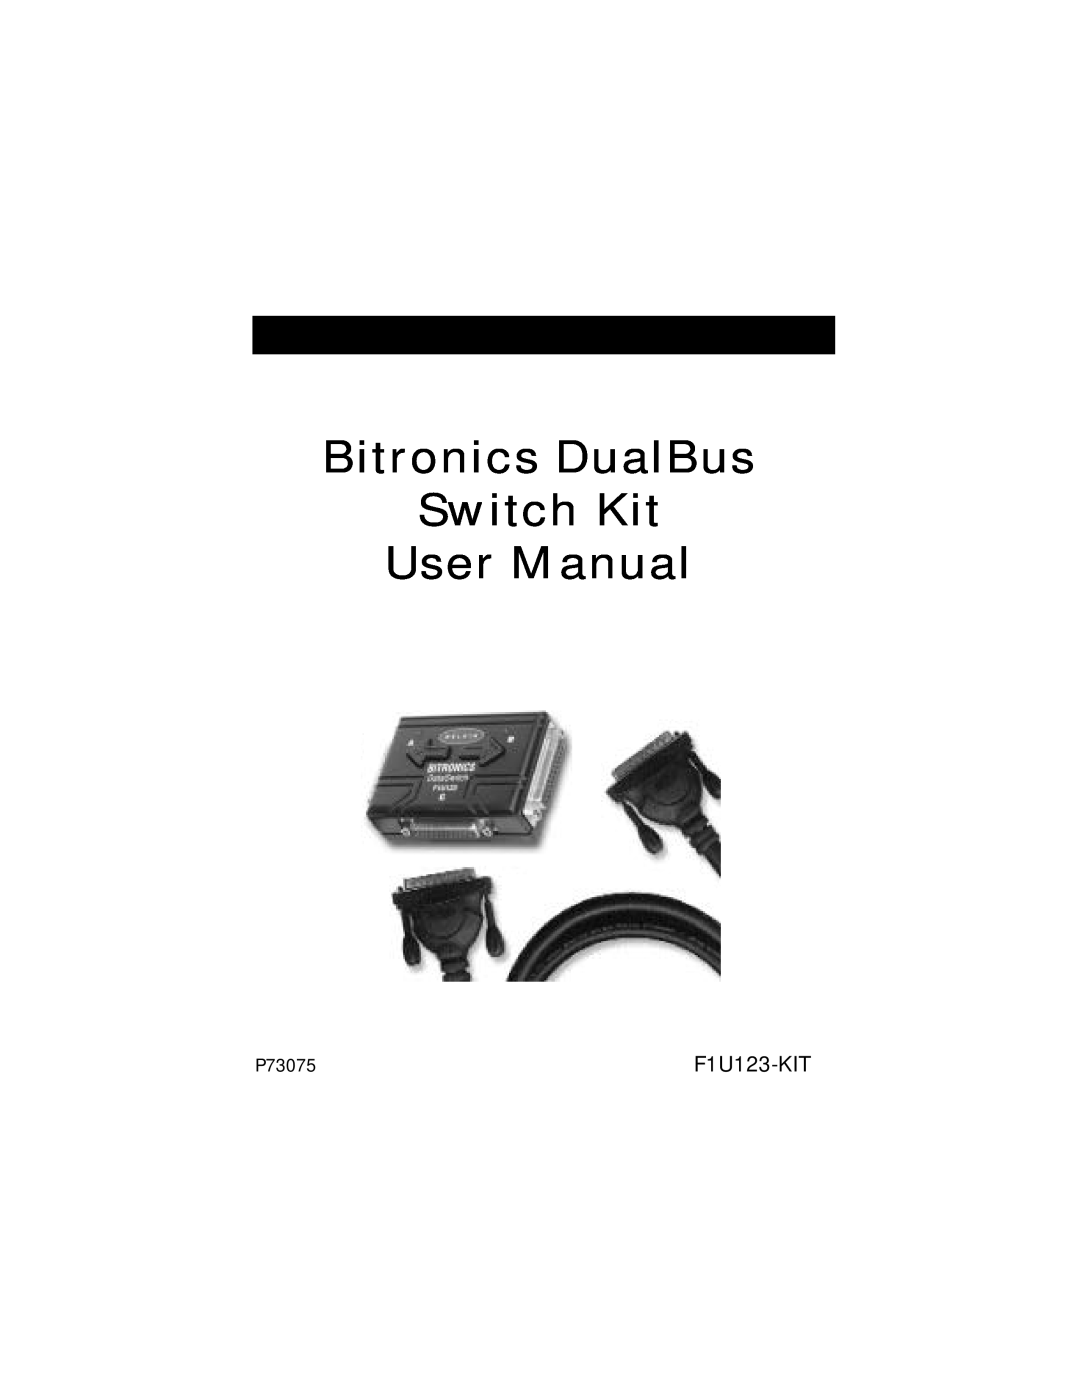 Belkin F1U123-KIT user manual P73075, Bitronics DualBus 